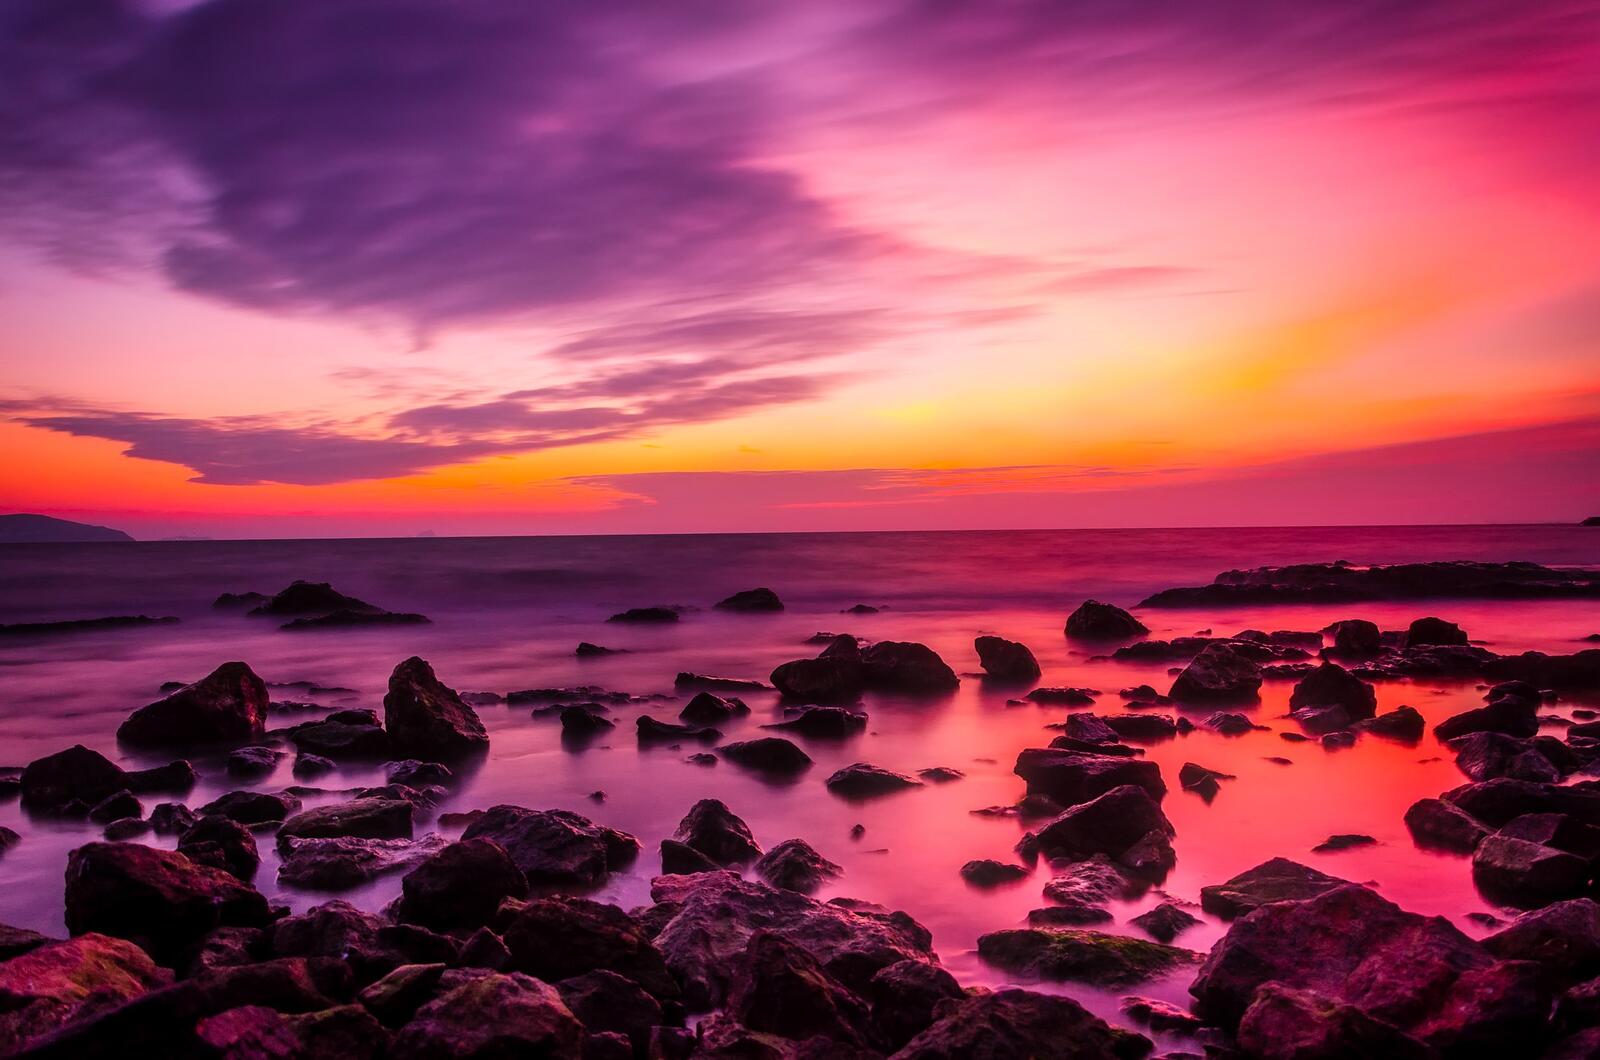 Бесплатное фото Розовый закат на море